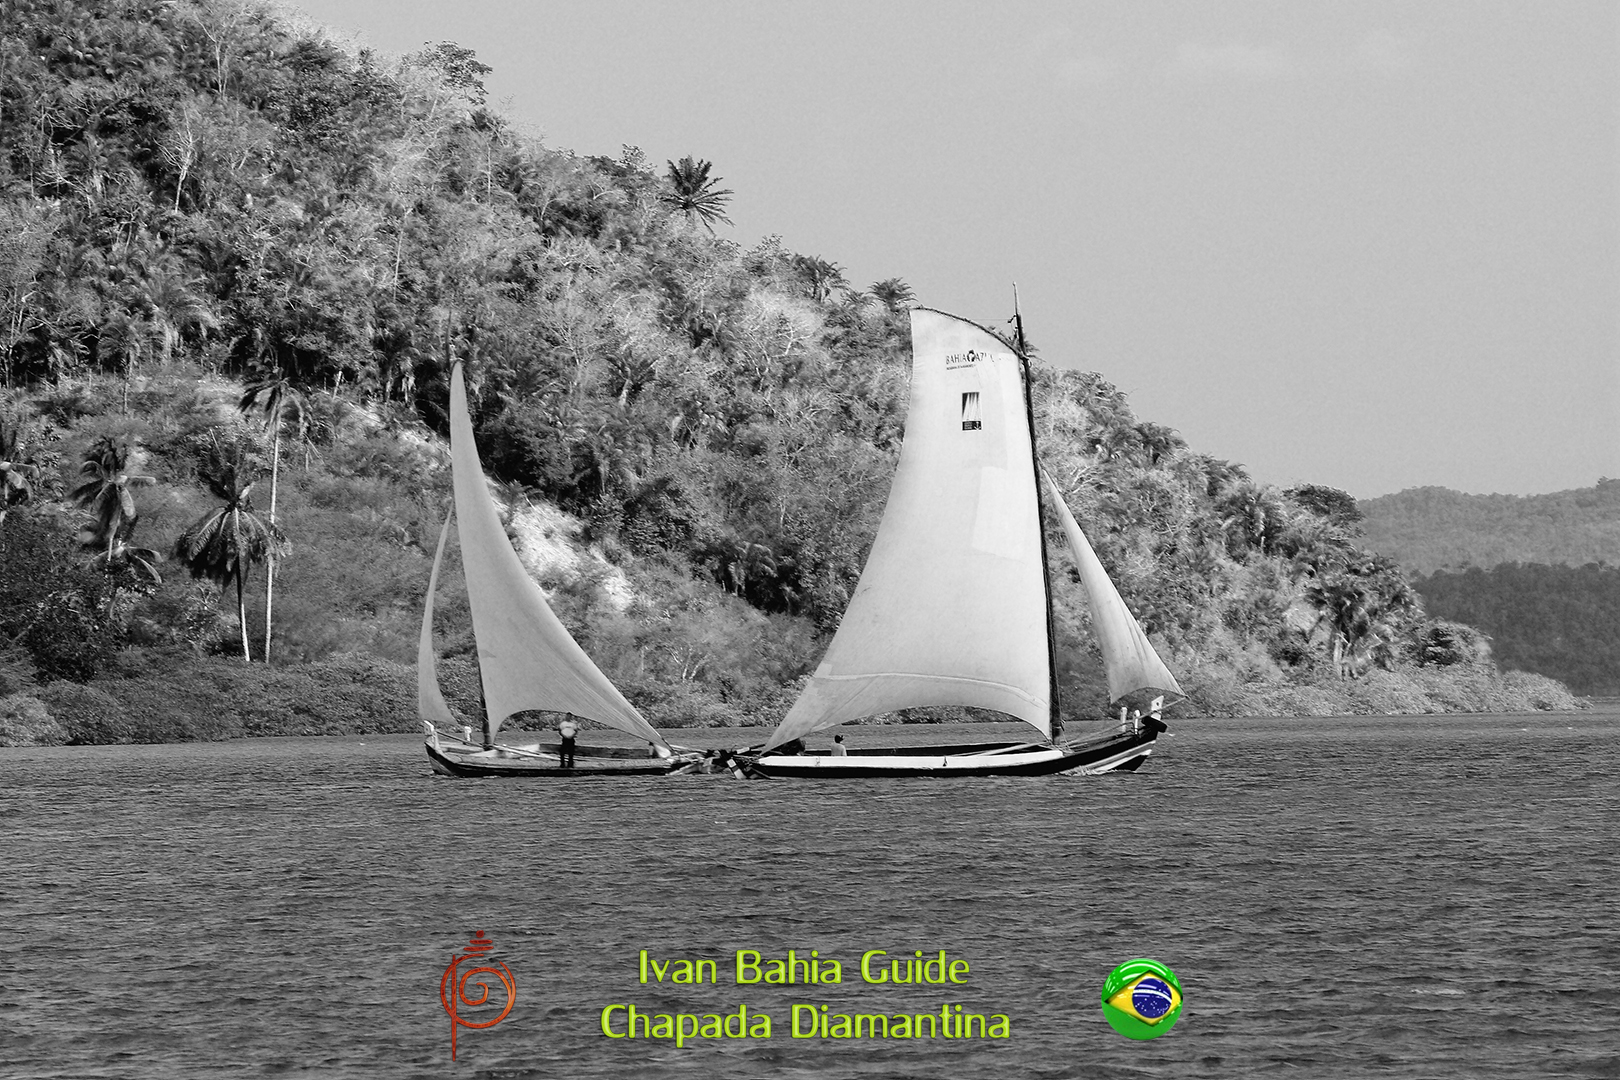 day-tour / visit Salvador da Bahia from your cruise ship with Ivan Bahia private Guide, exclusive photography #ivanbahiaguide #toursbylocals @ #bahiametisse #ssalovers #ivanbahiatravelguide #salvador